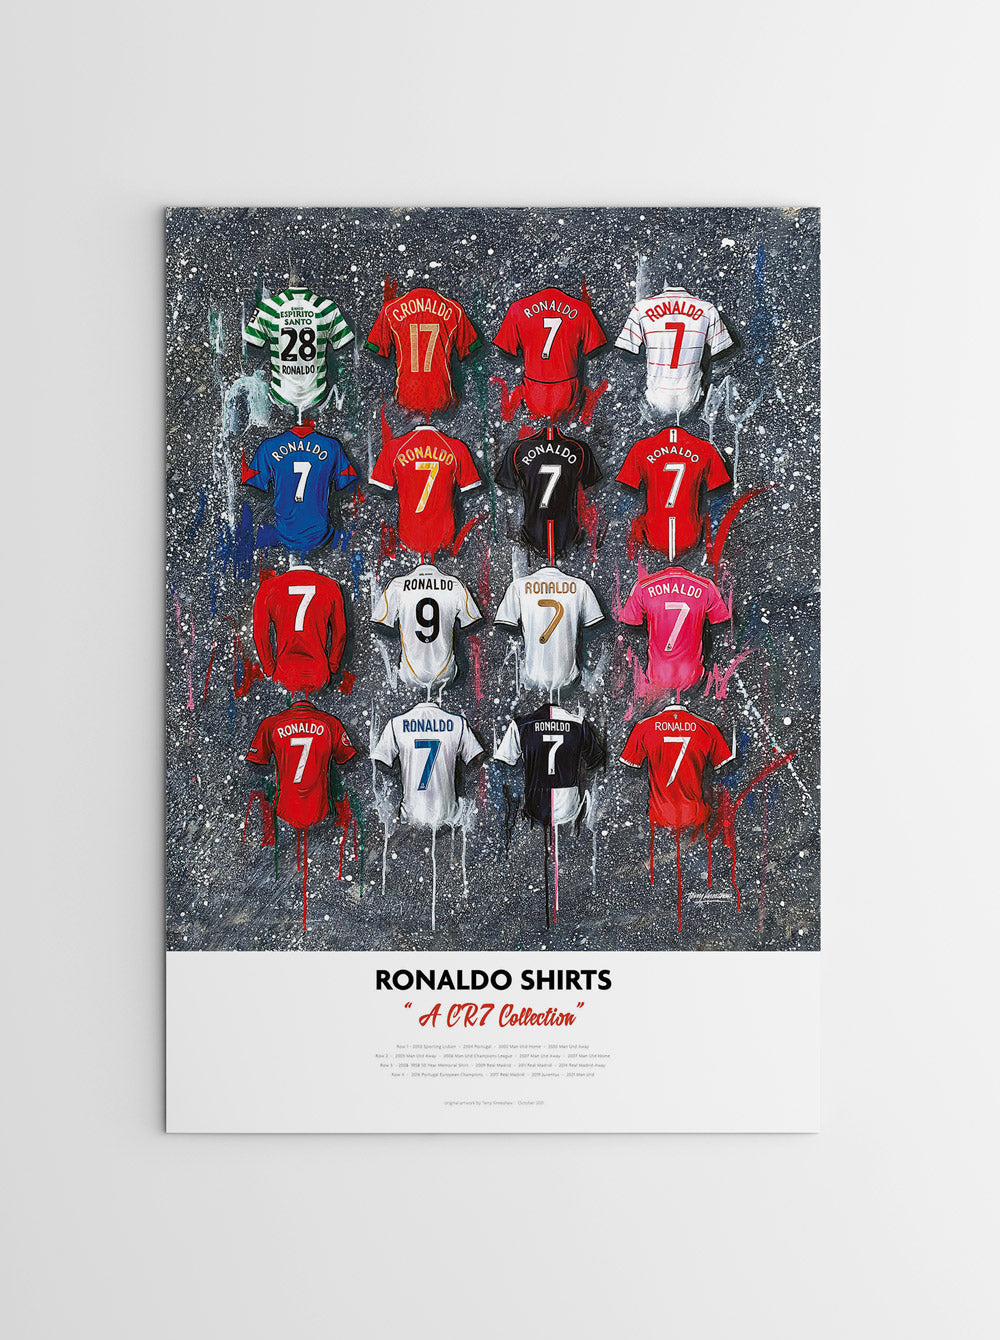 Ronaldo Shirts - A2 Signed Limited Edition Prints